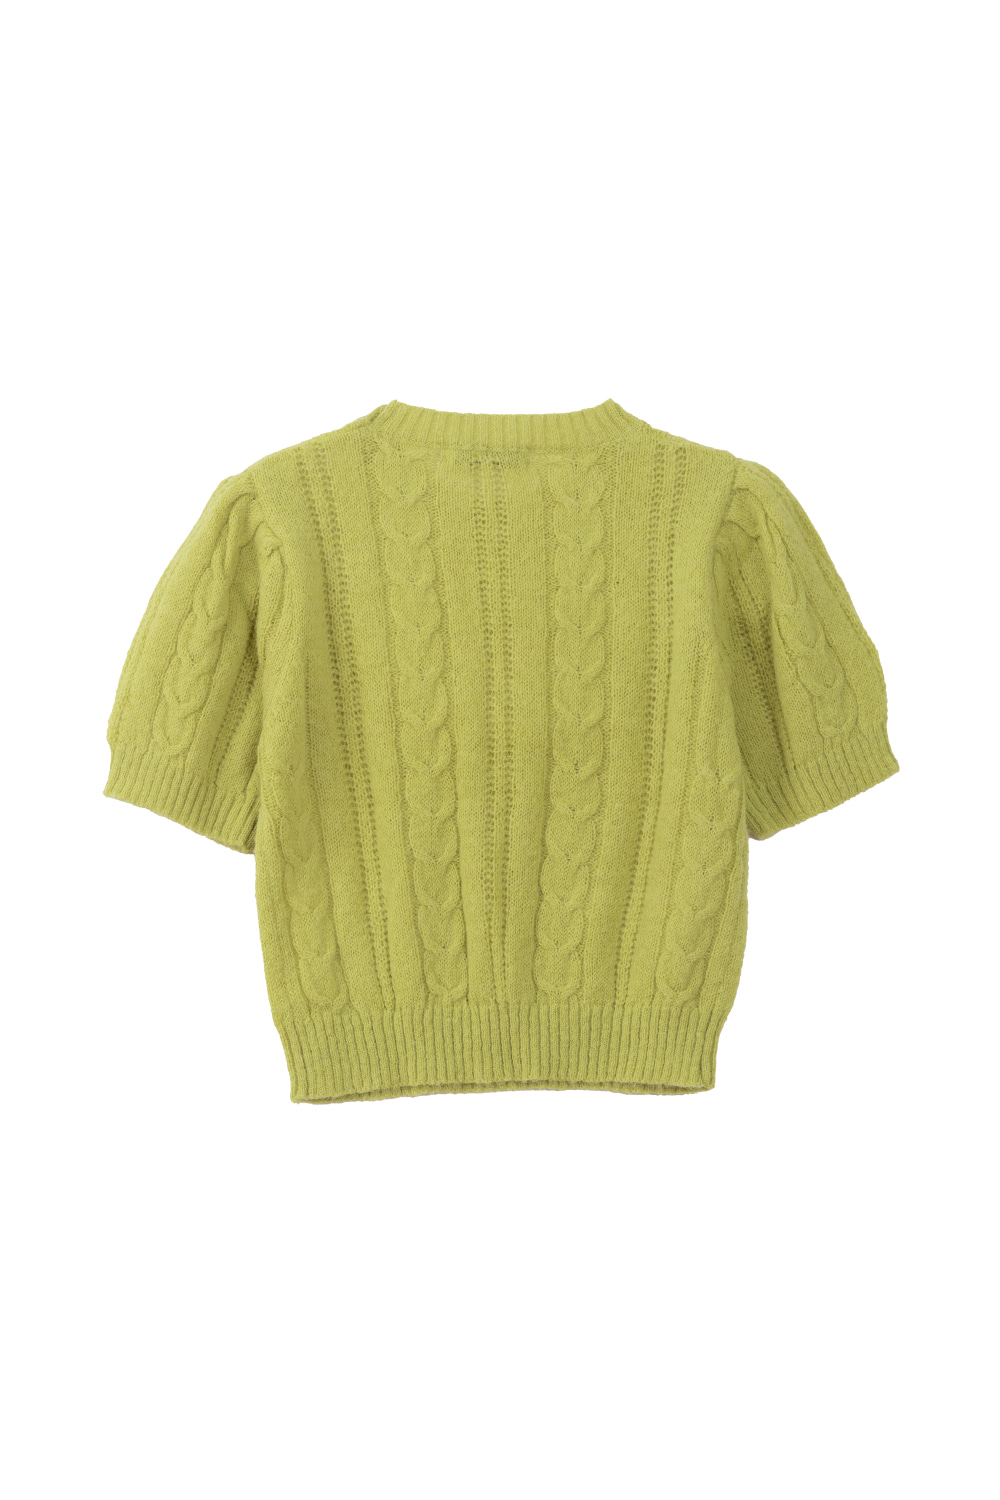 Wool Blended Twist Half Knit Top (Lime)